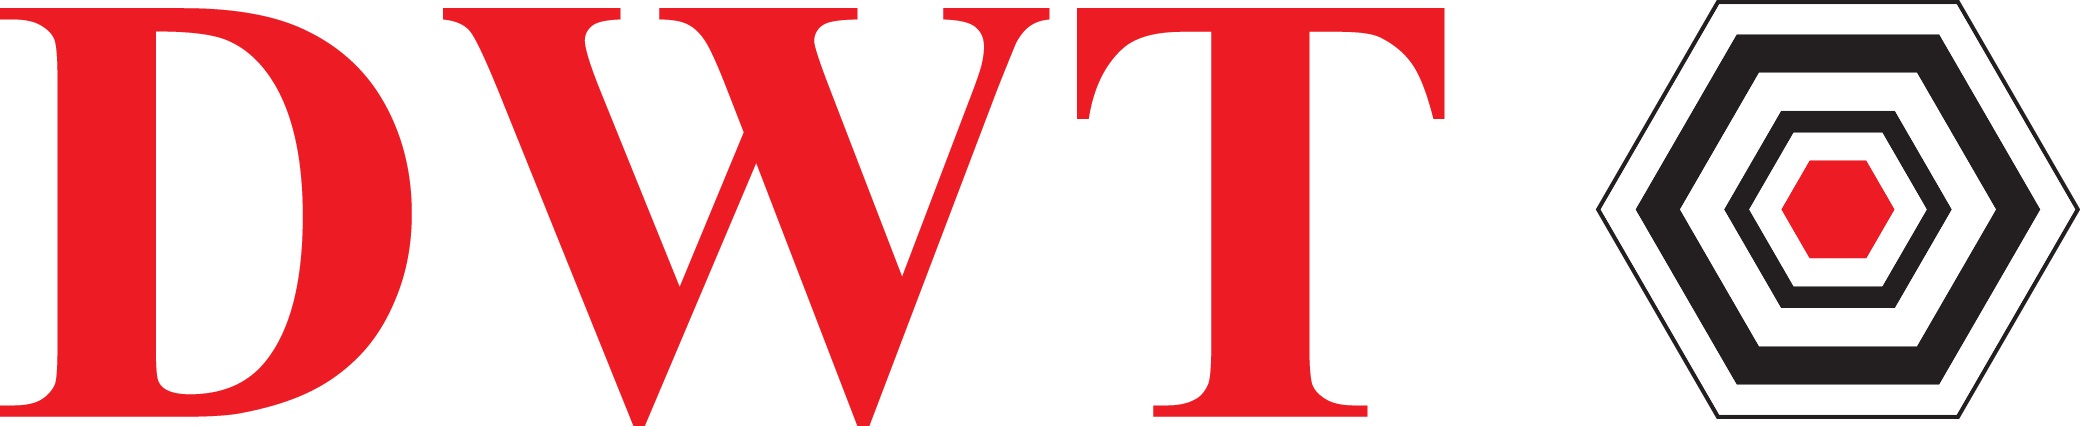 Логотип бренда DWT